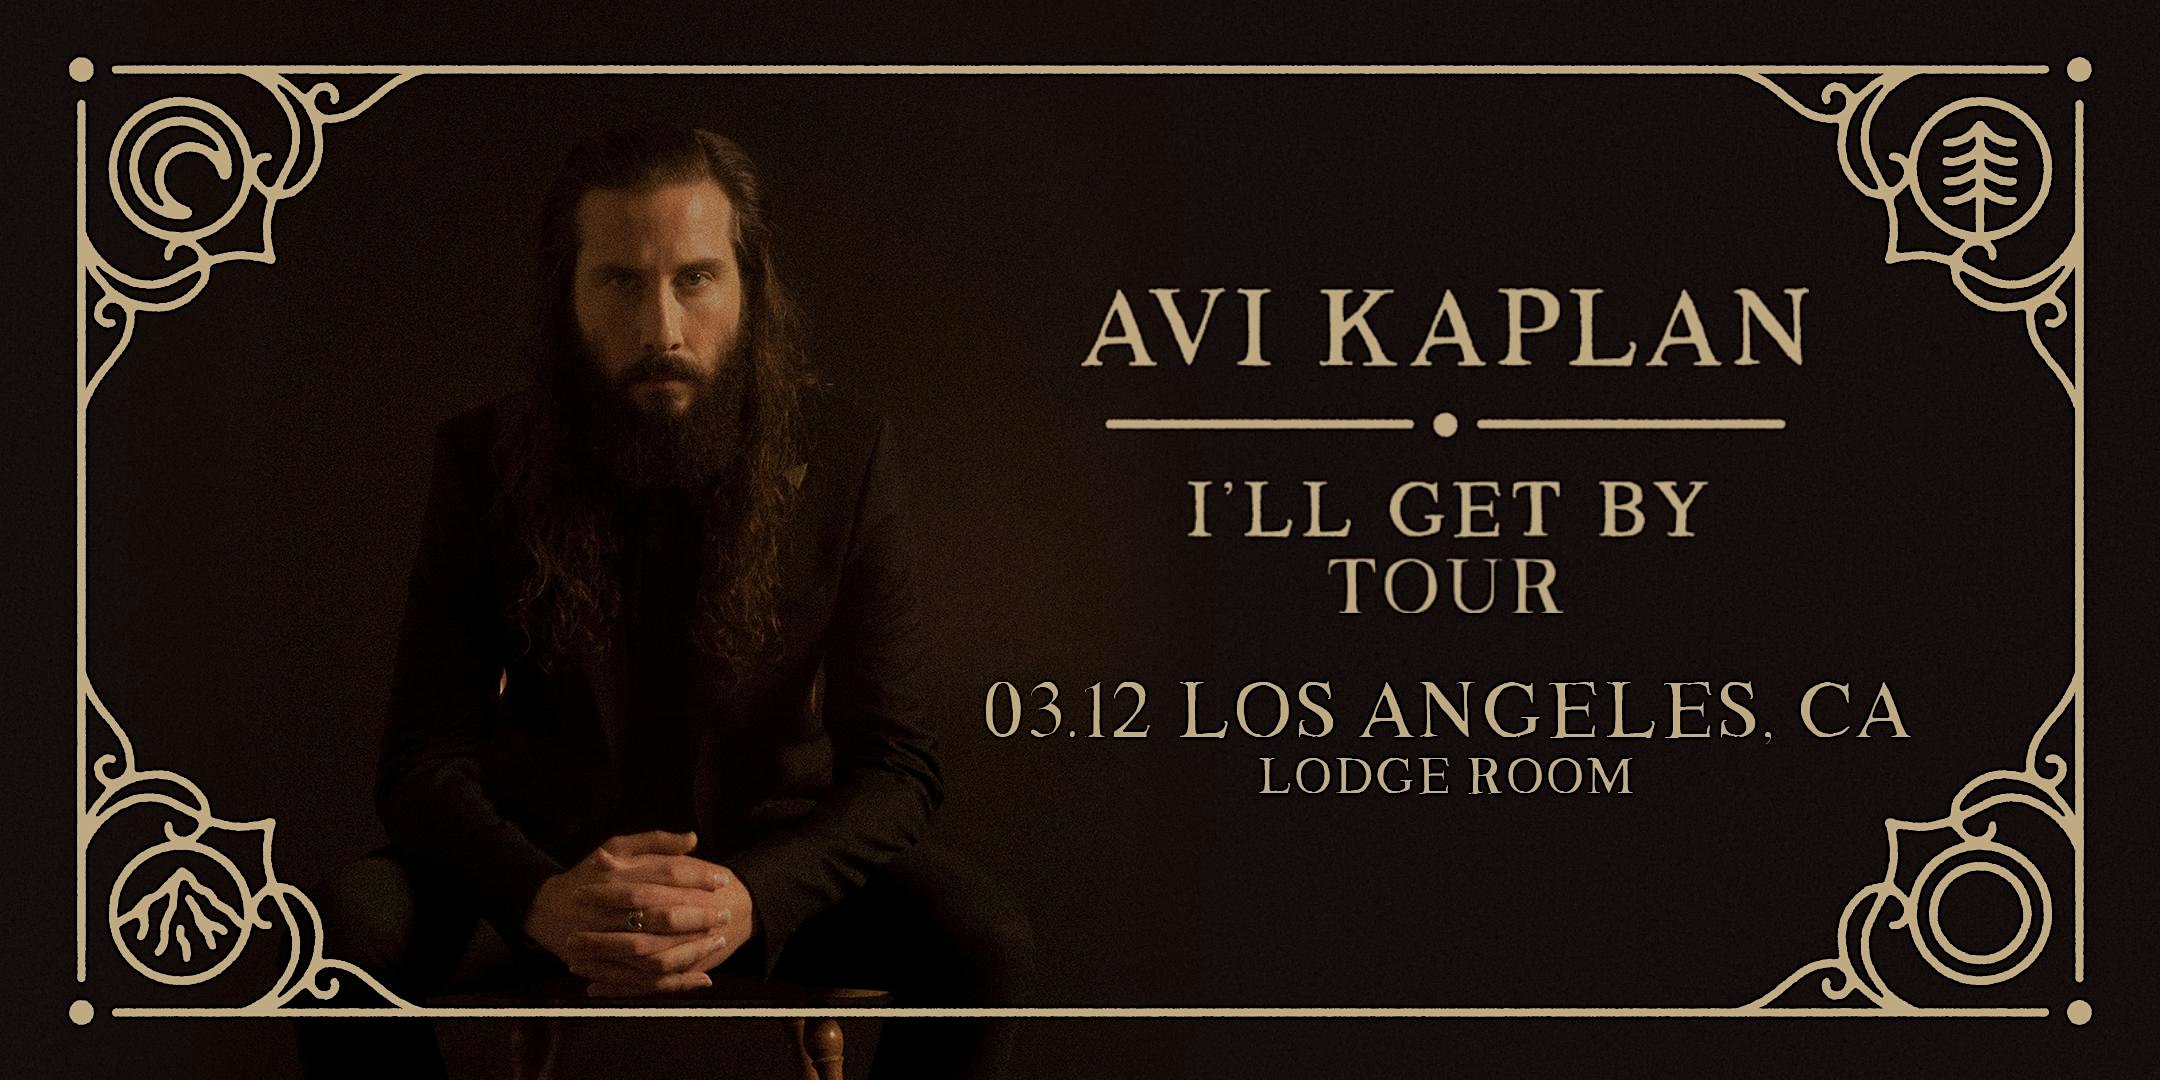 Avi Kaplan Tickets Lodge Room Los Angeles Ca March 12th